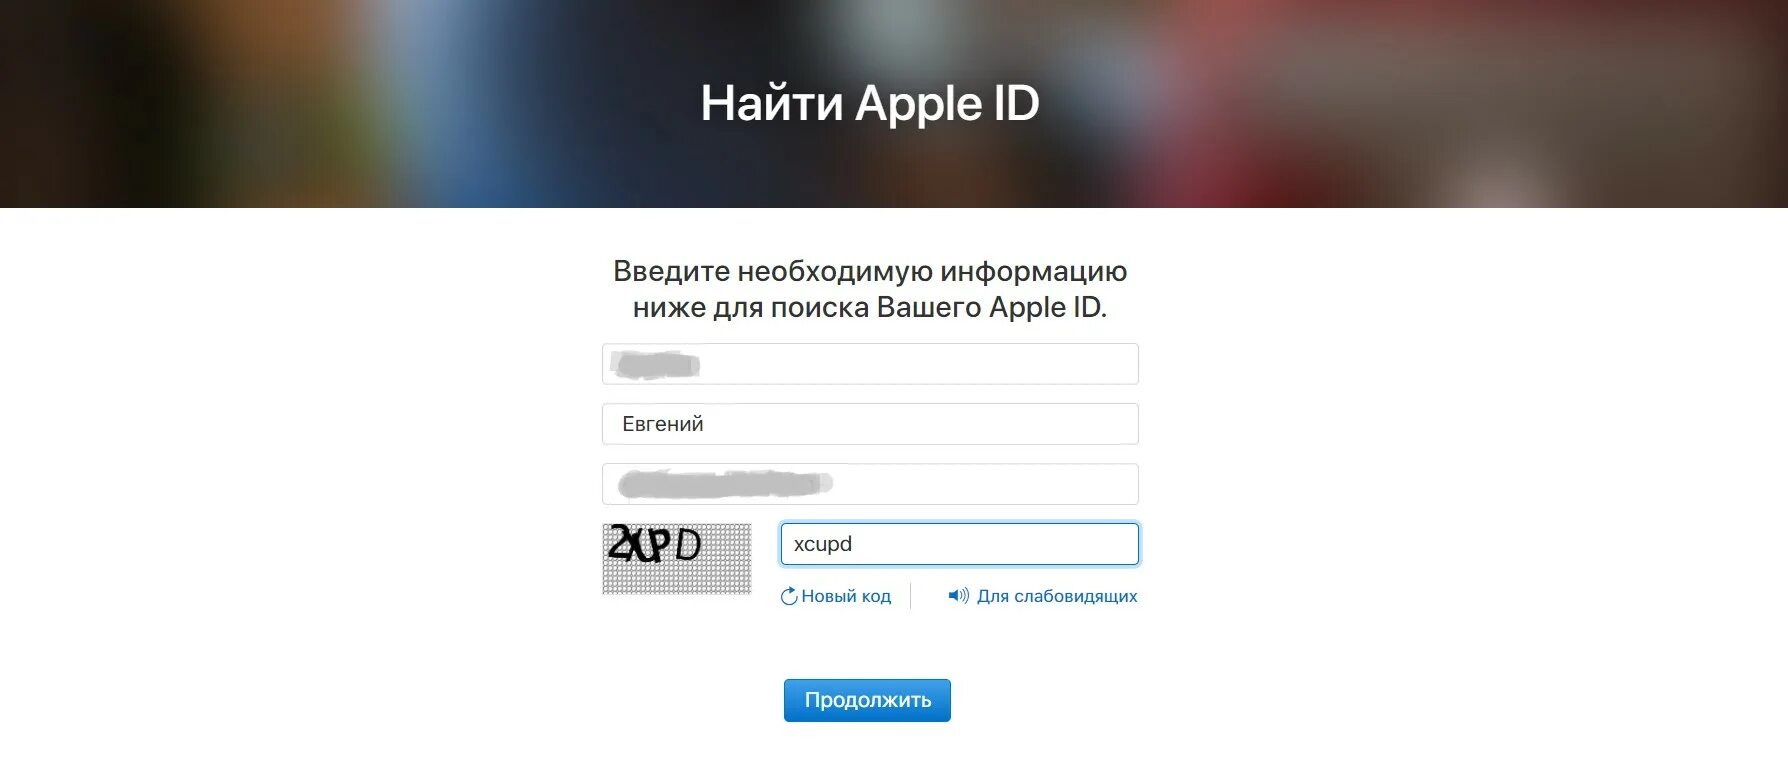 Удалить пароль apple id. Пароль от Apple ID. Пароль для эпл айди. Забыл пароль от Apple ID. Забыла пароль эпл айди.